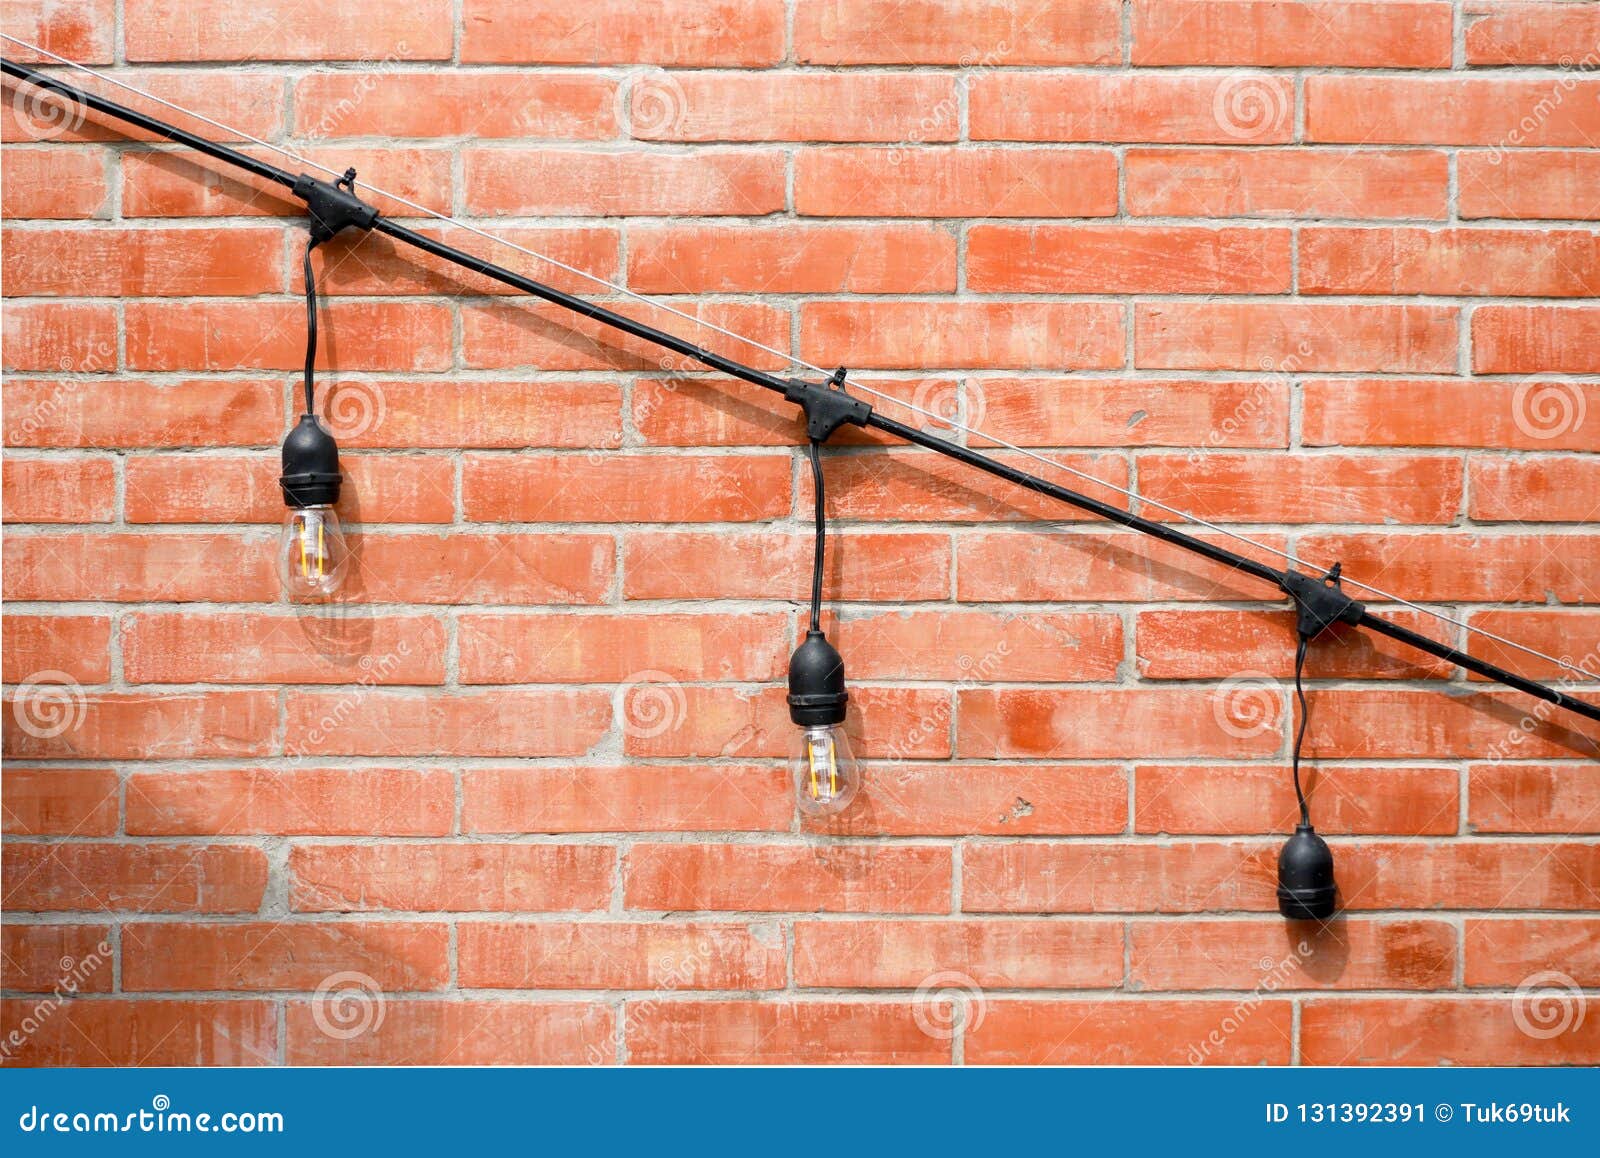 Lamp On Brick Wall Interior Design Stock Image Image Of